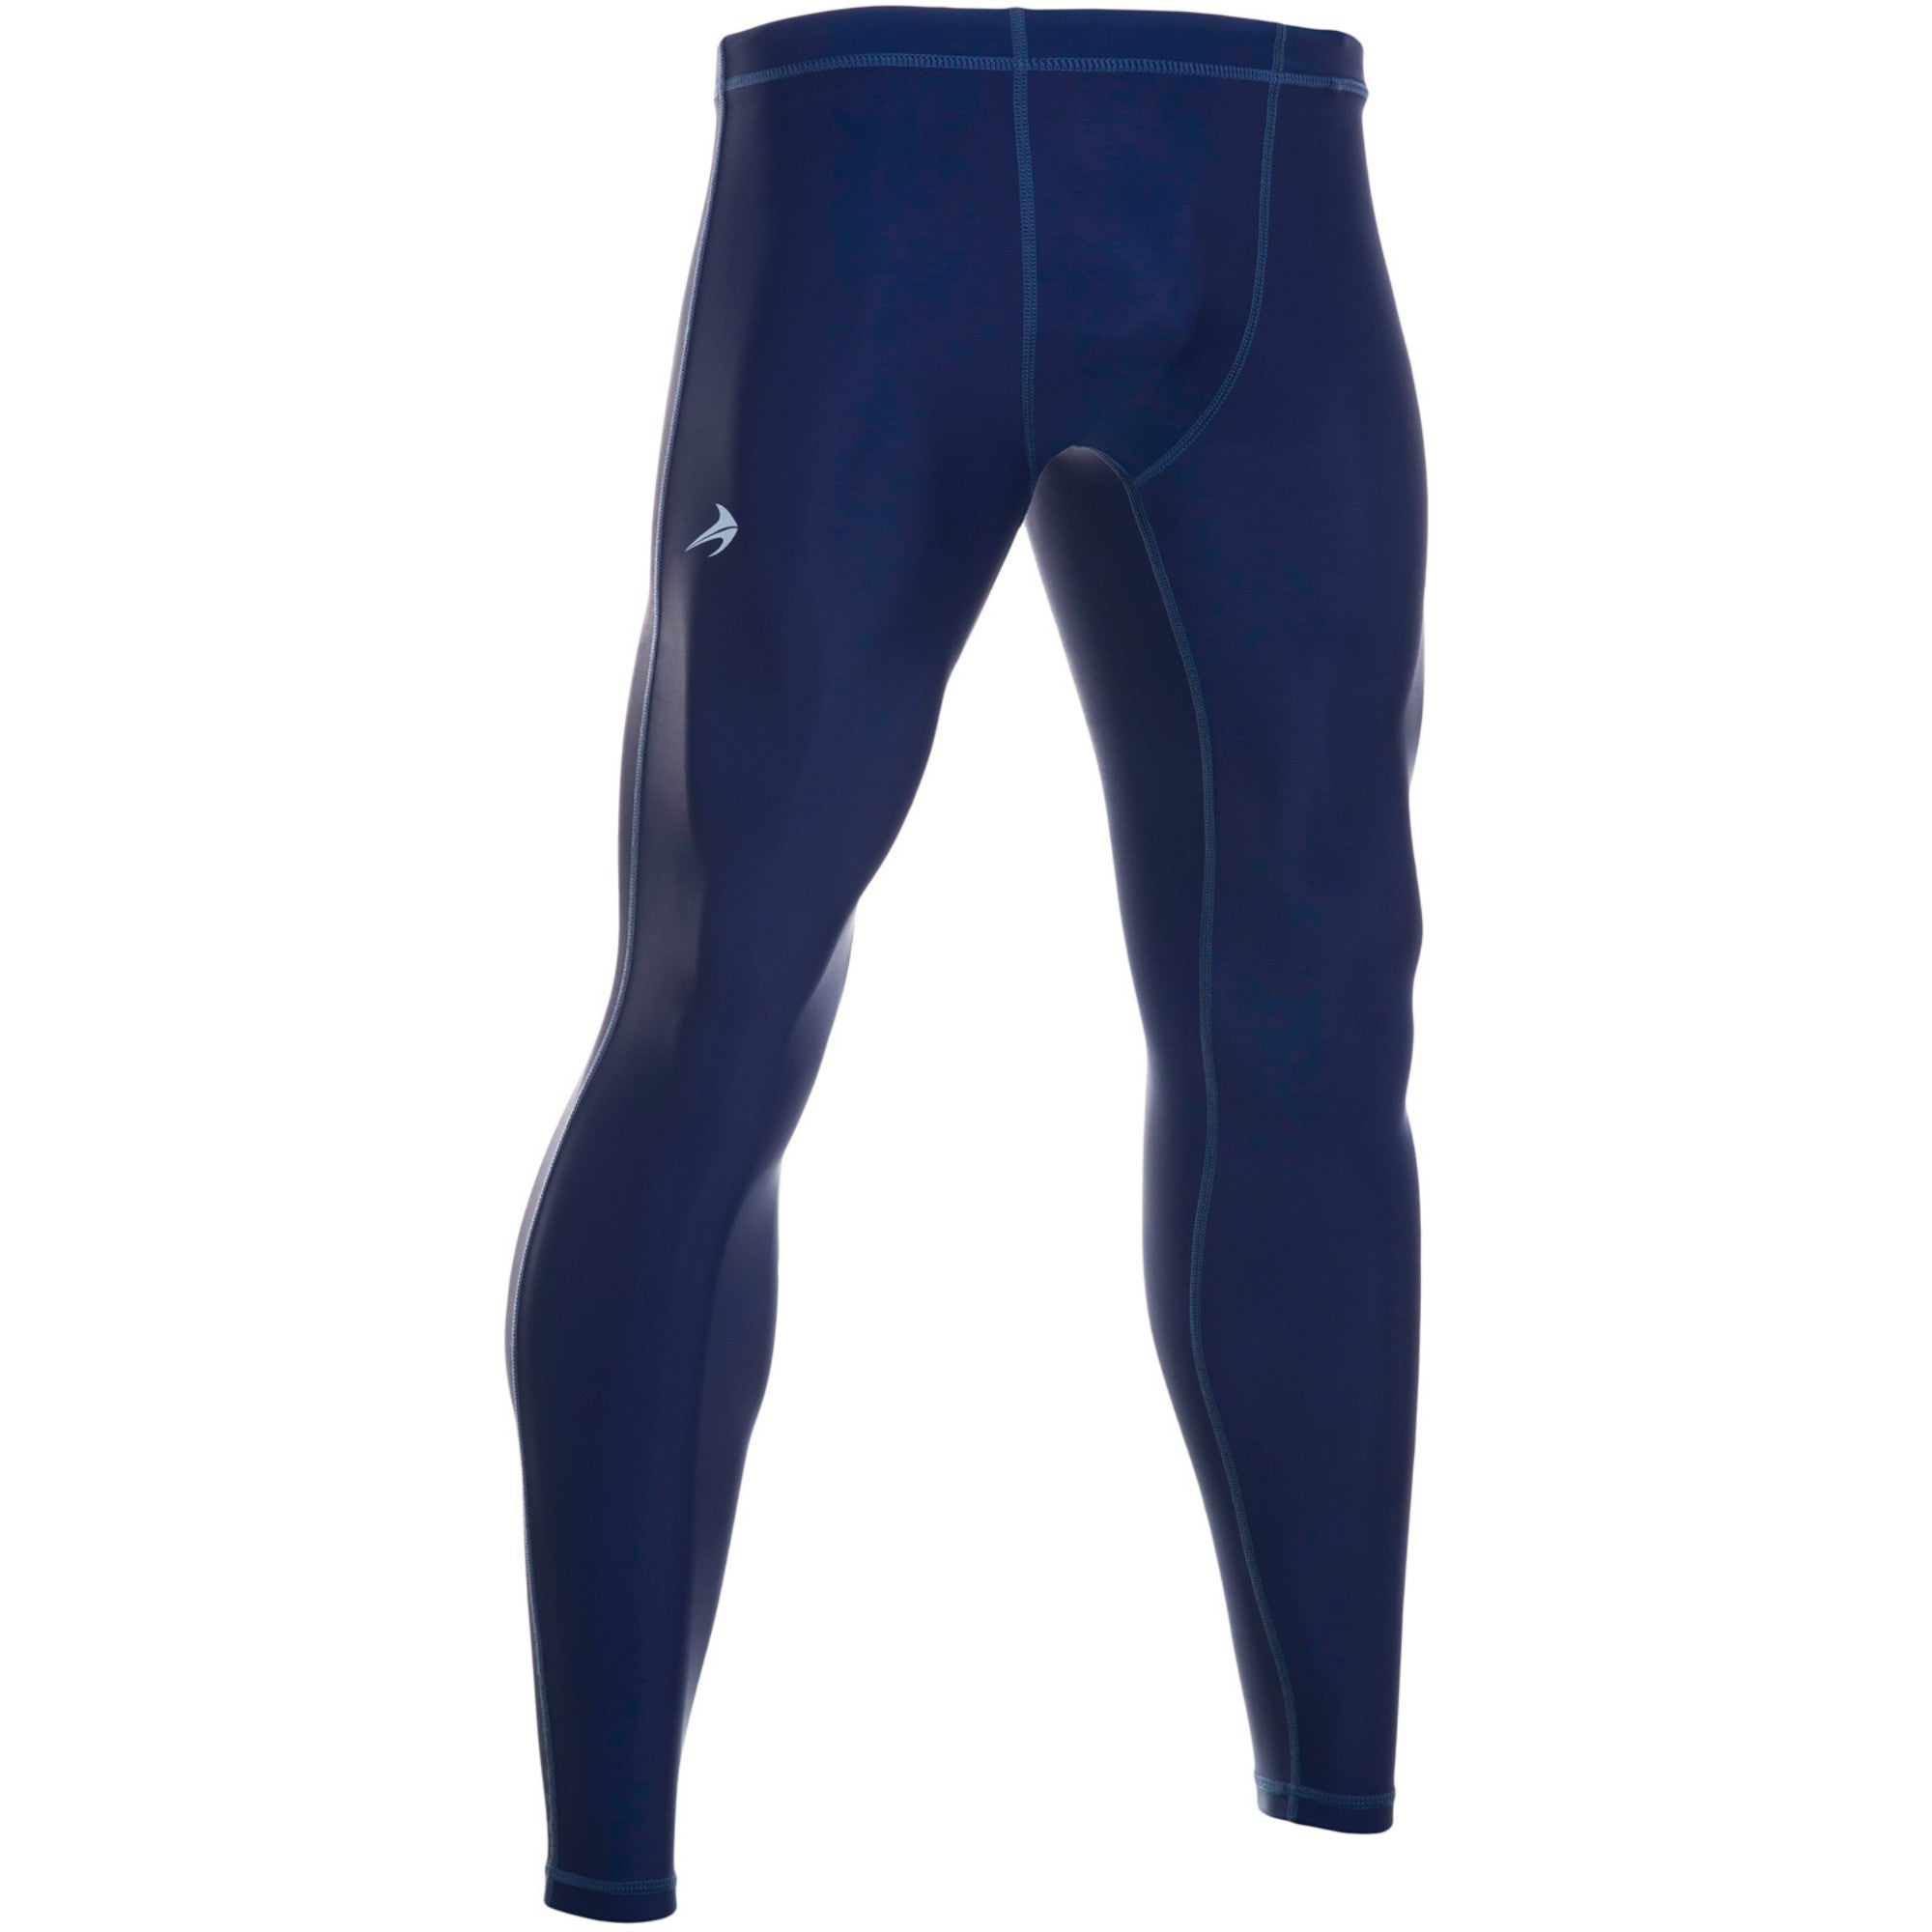 Bucwild Sports 3/4 Compression Pants/Tights - Navy Blue Medium